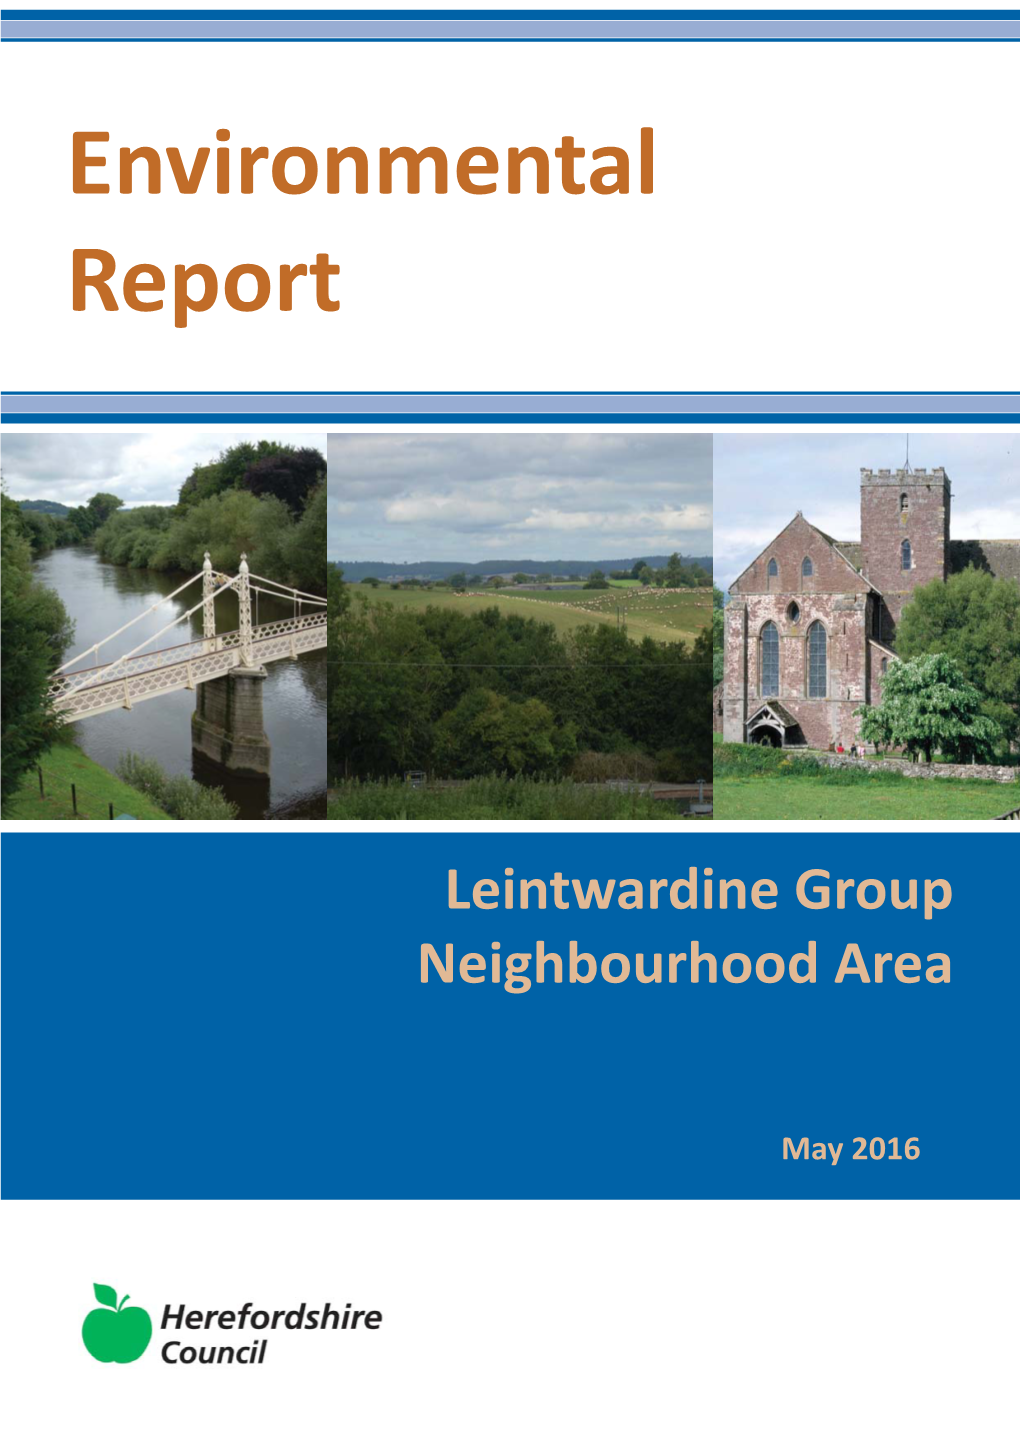 |Leintwardine Group Environmental Report